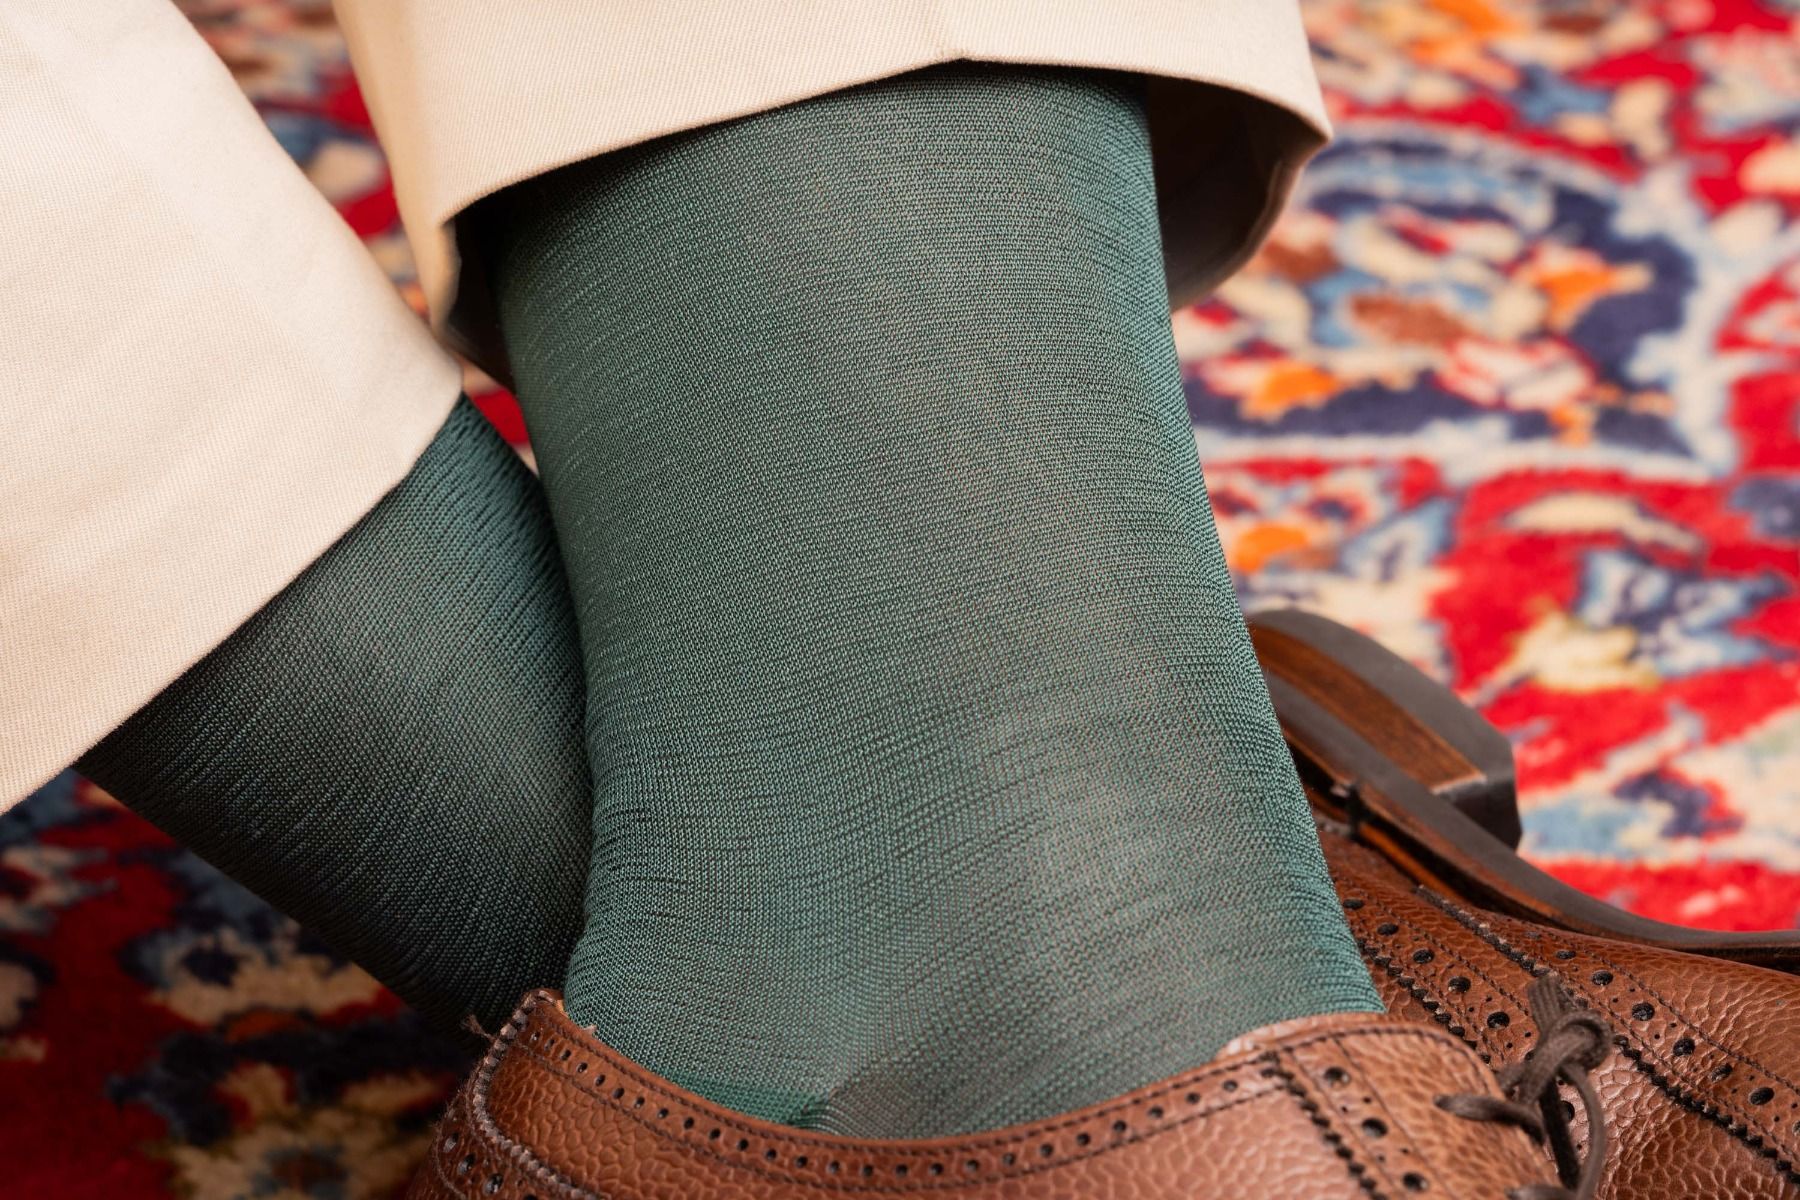 Finest Socks In The World - Over The Calf in Bottle Green Silk